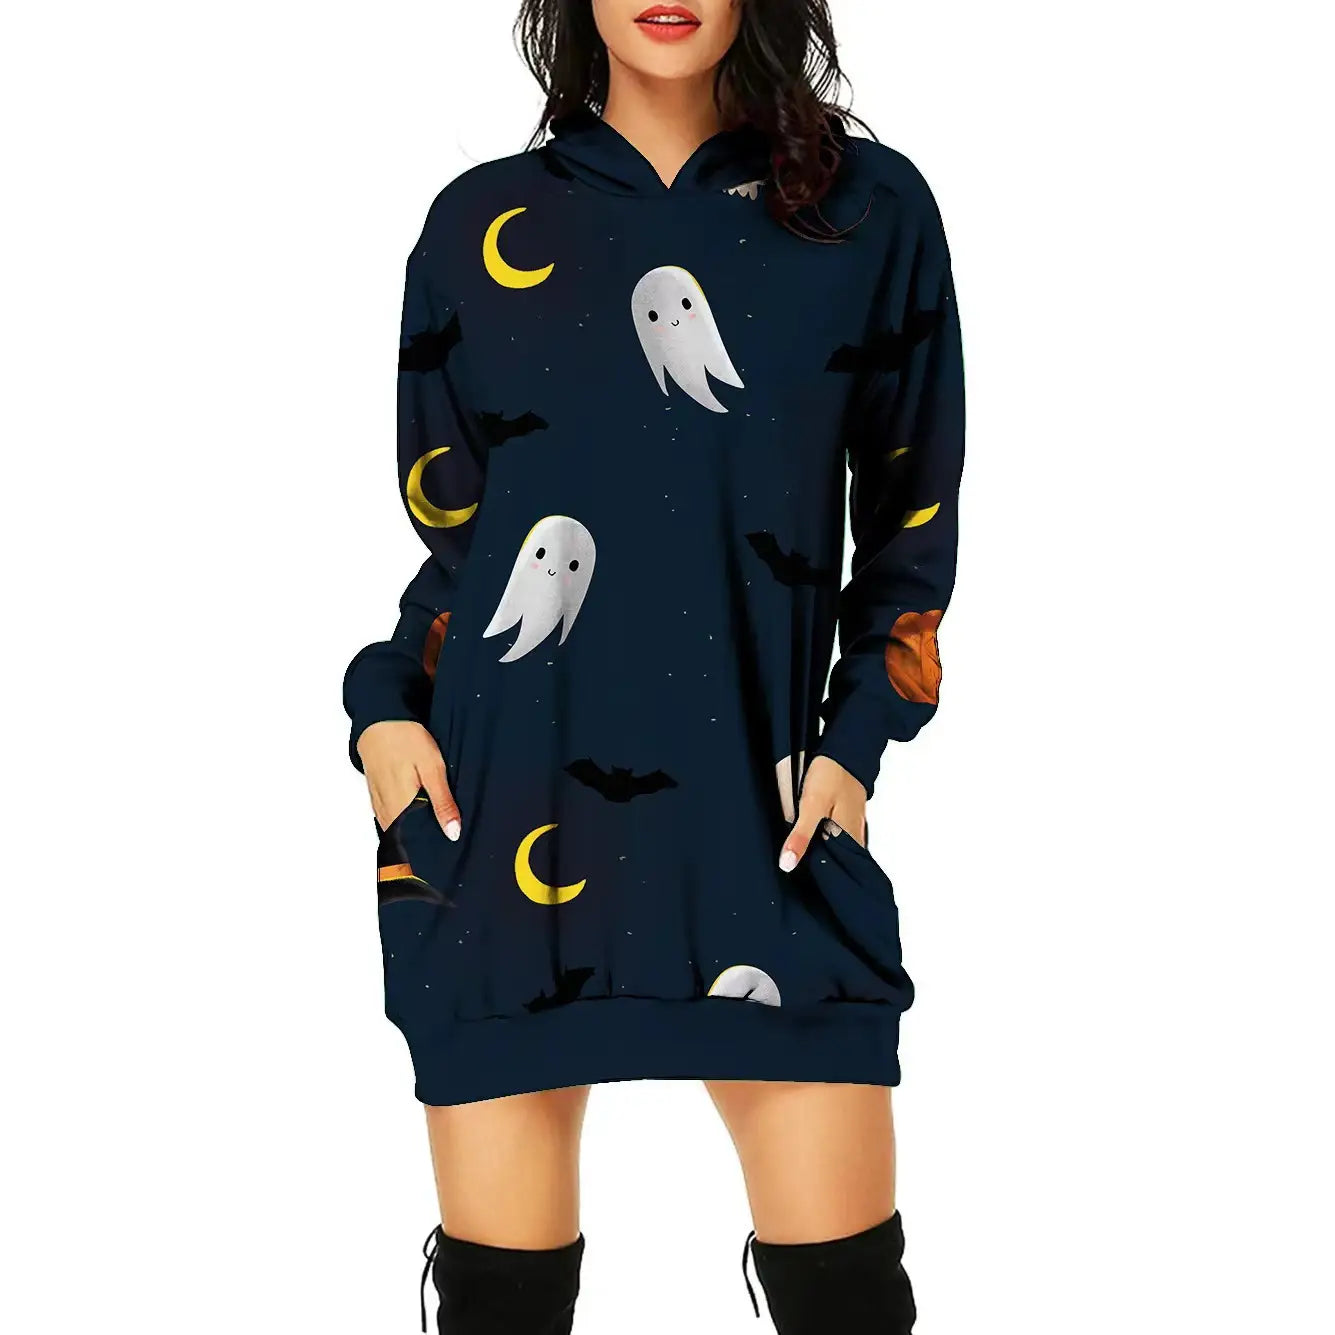 Lovemi - Women’s Halloween Theme Positioning Print Dress